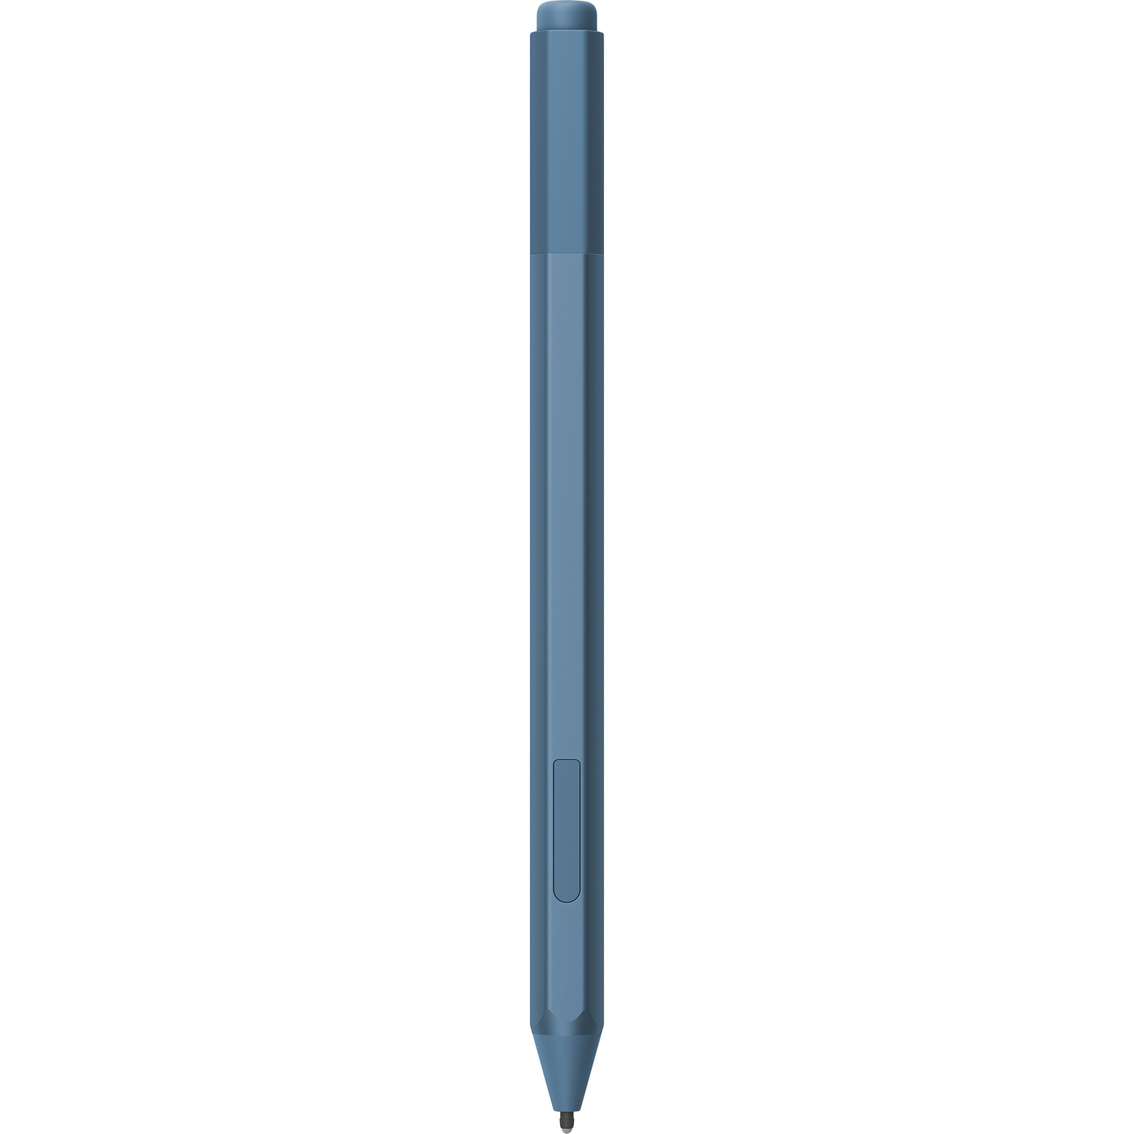 Microsoft Surface Pen, Ice Blue - Image 2 of 2